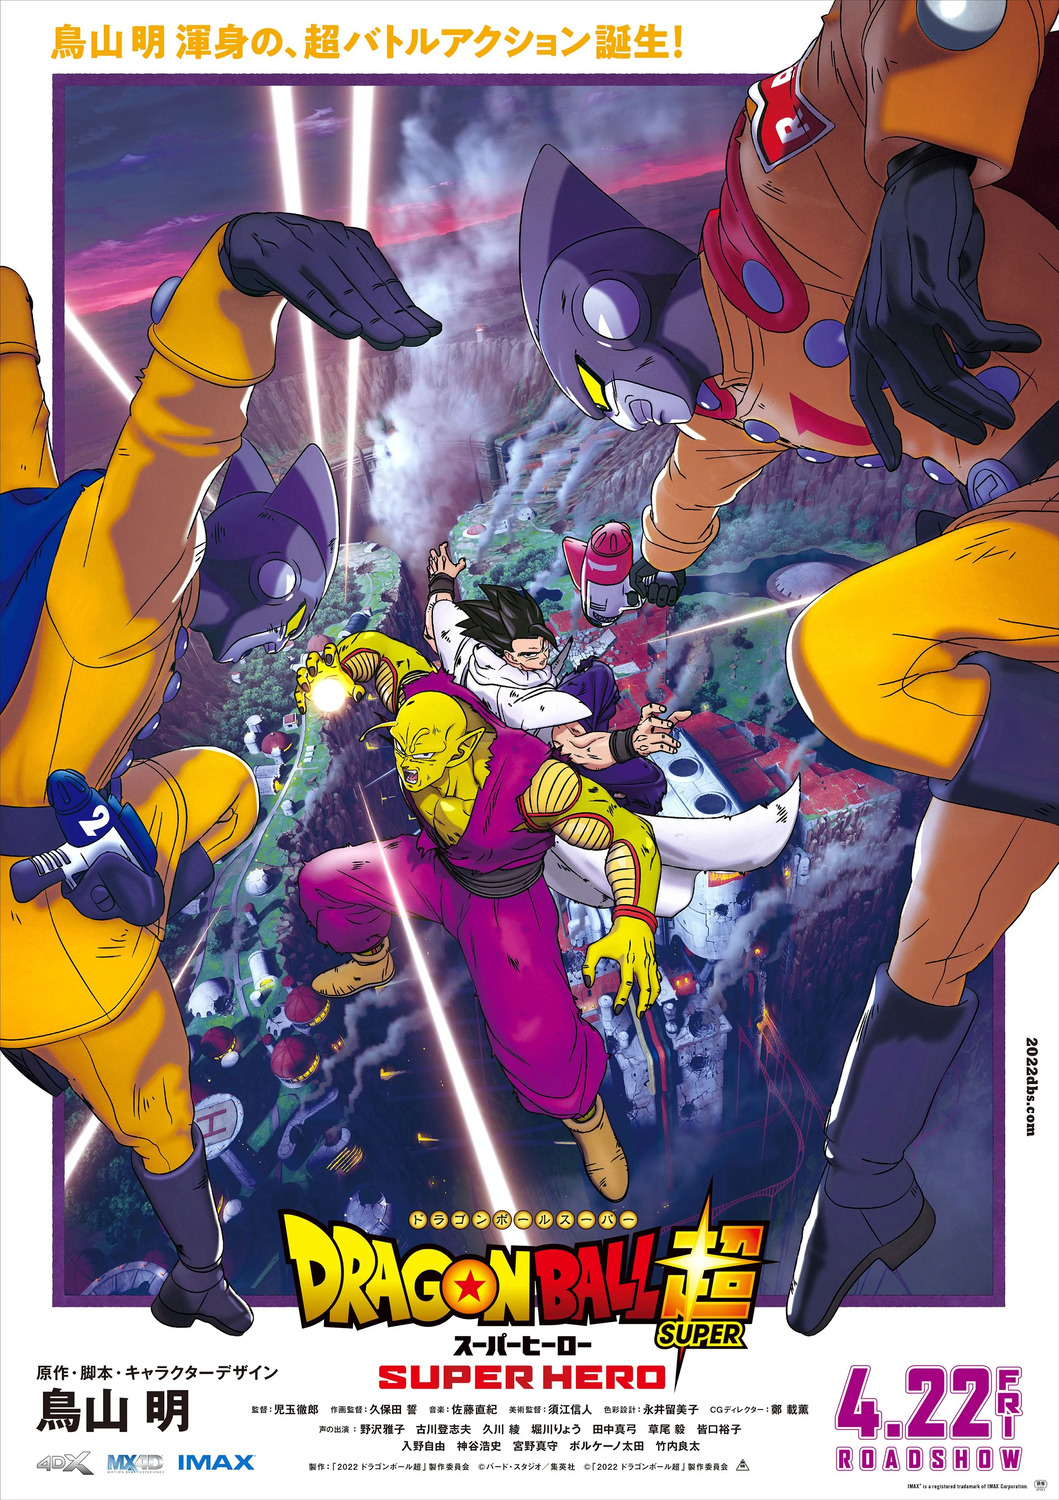 Extra Large Movie Poster Image for Doragon boru supa supa hiro (#2 of 11)